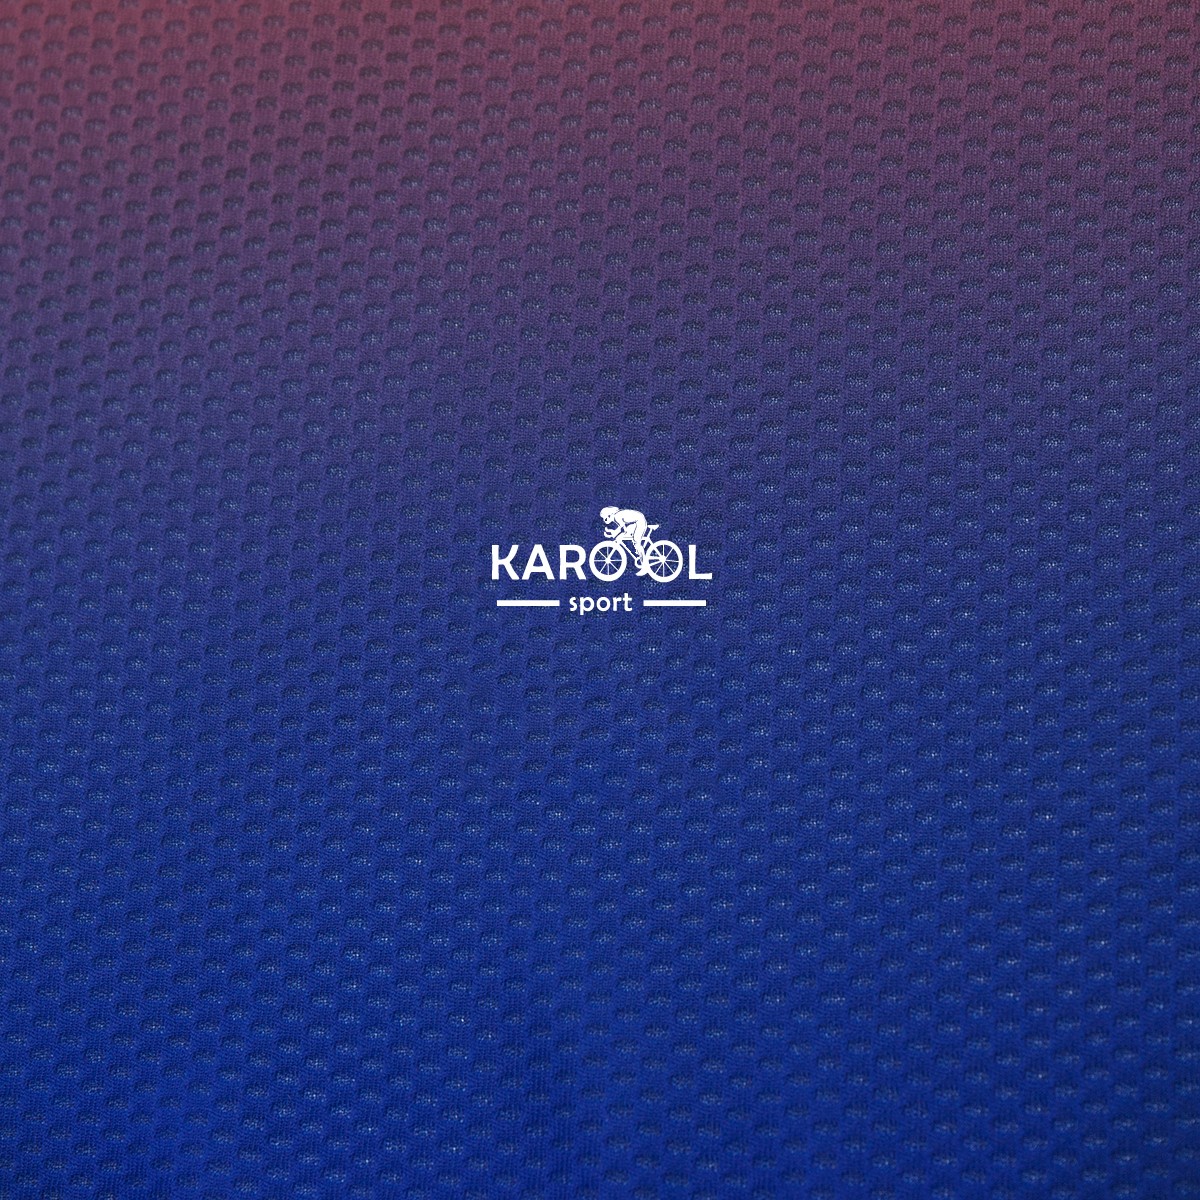 Karool wholesale running t shirt with good price for short run-7